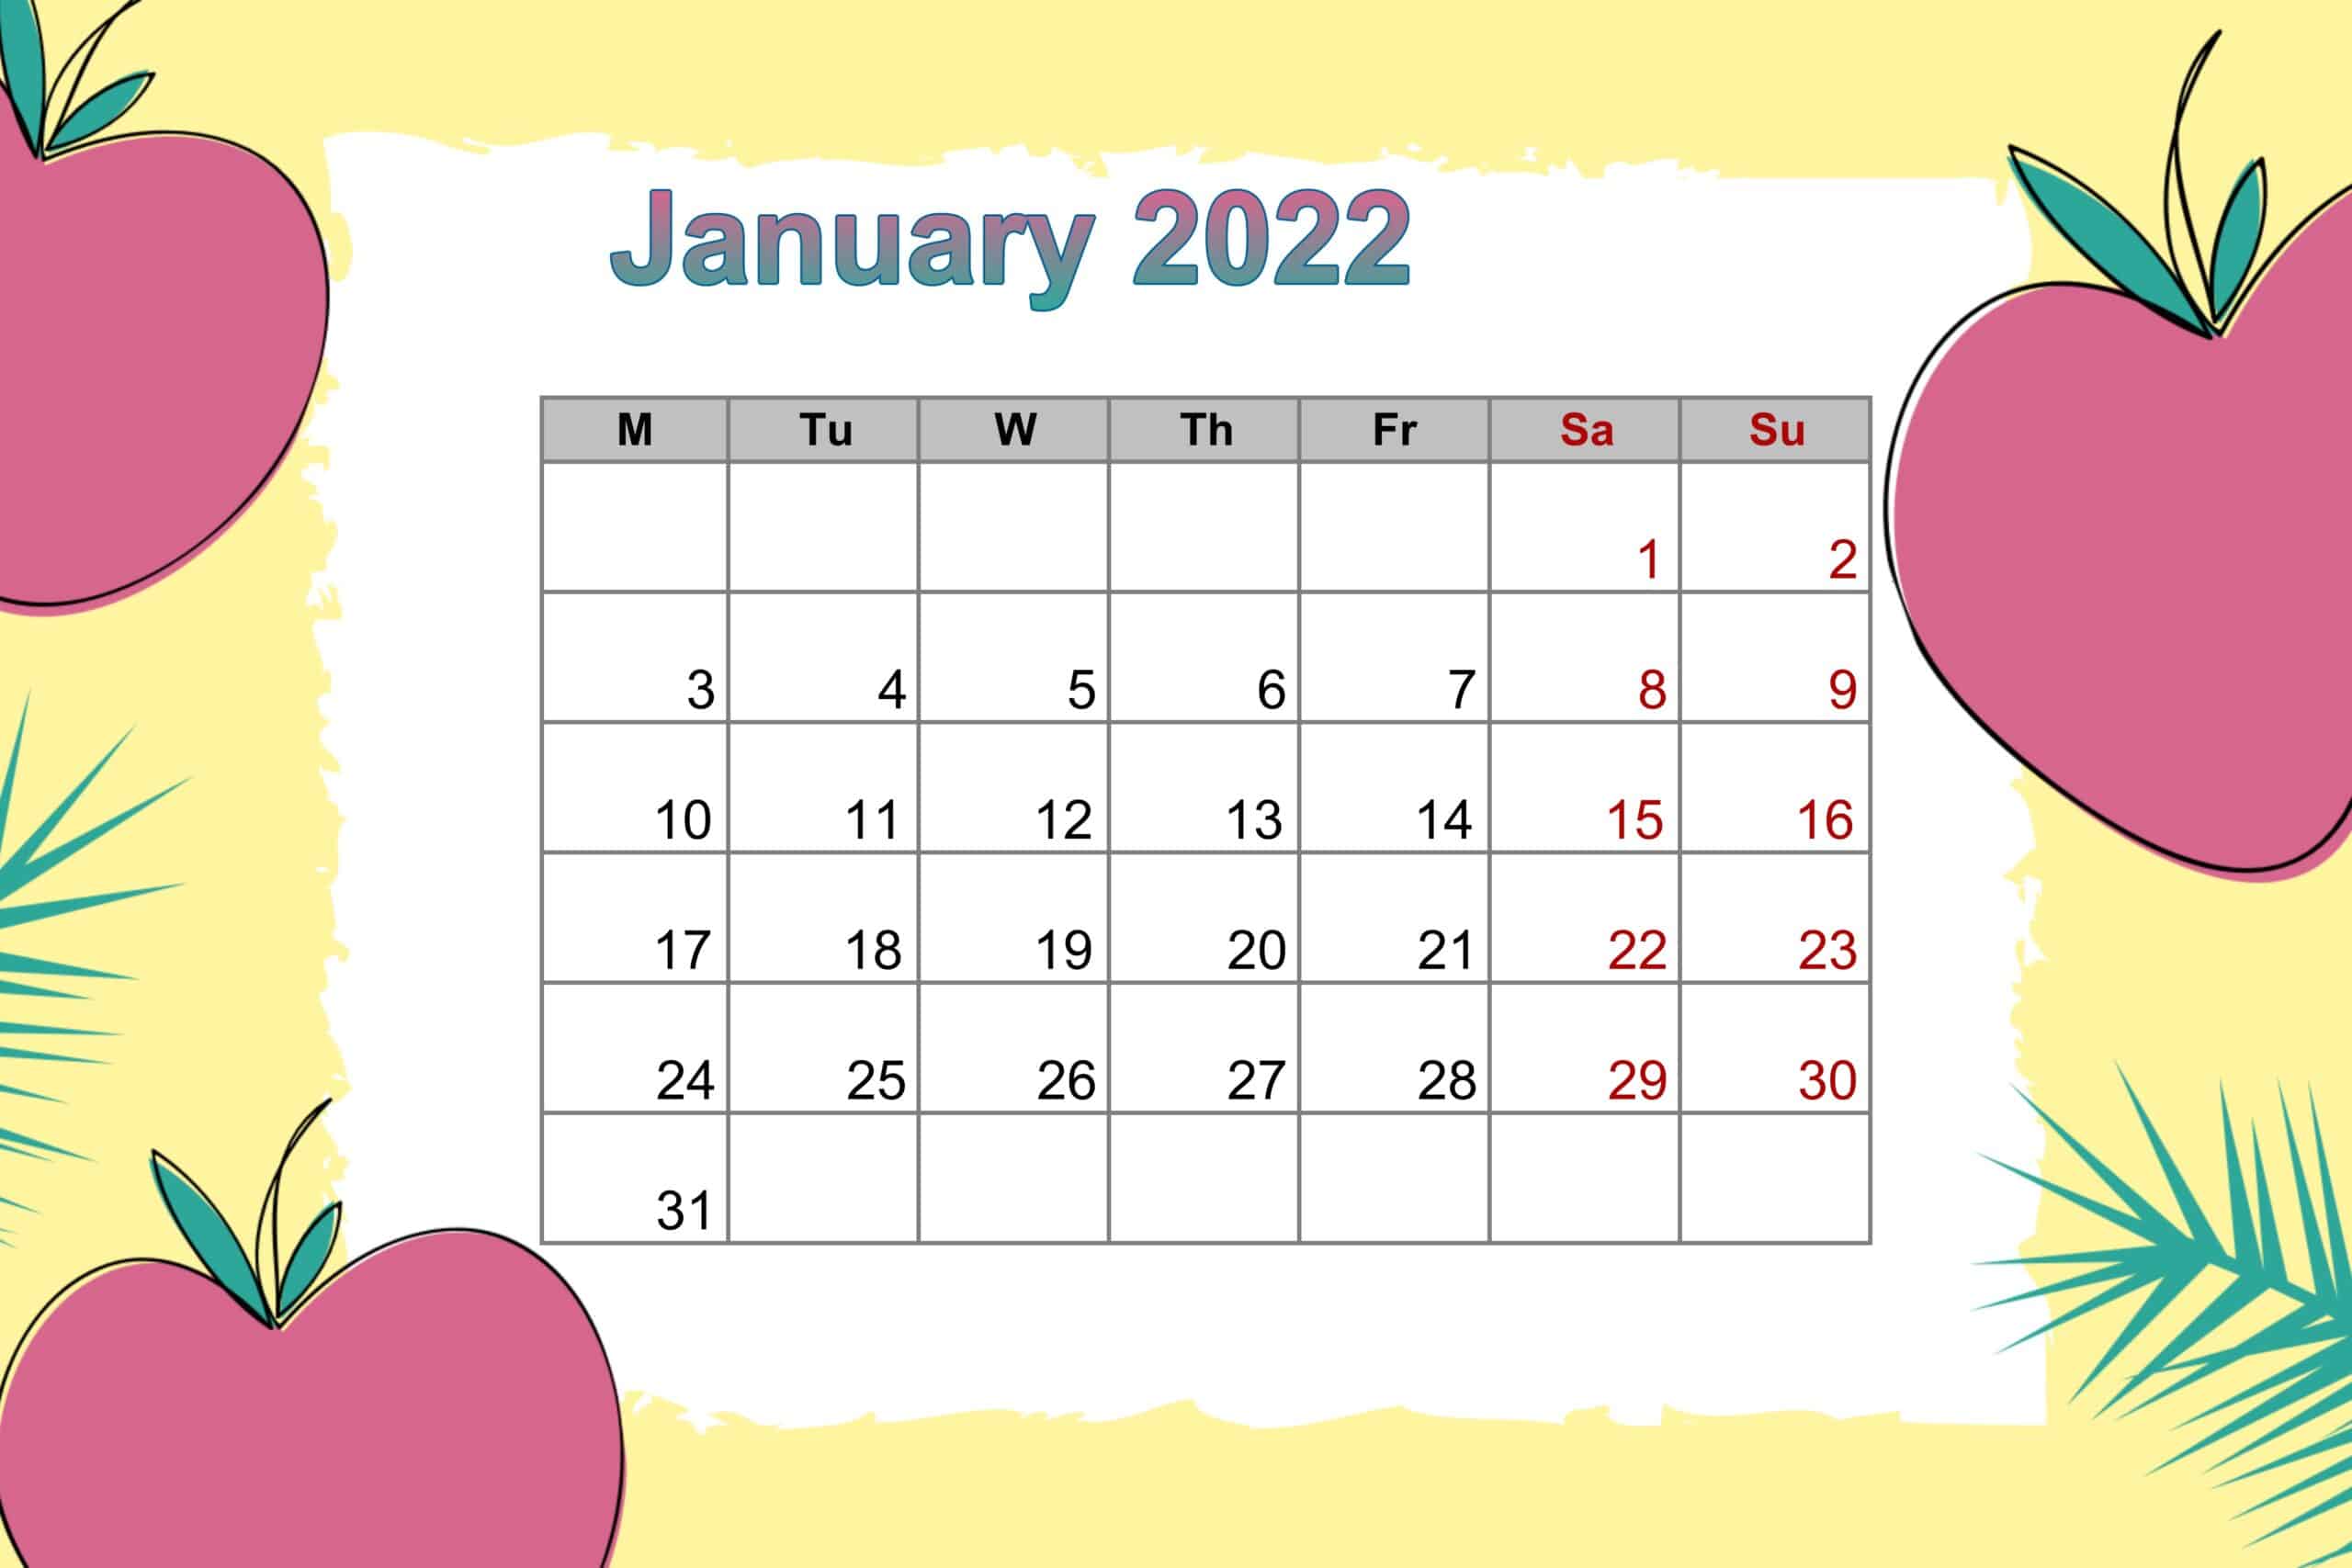 January 2022 Floral Calendar